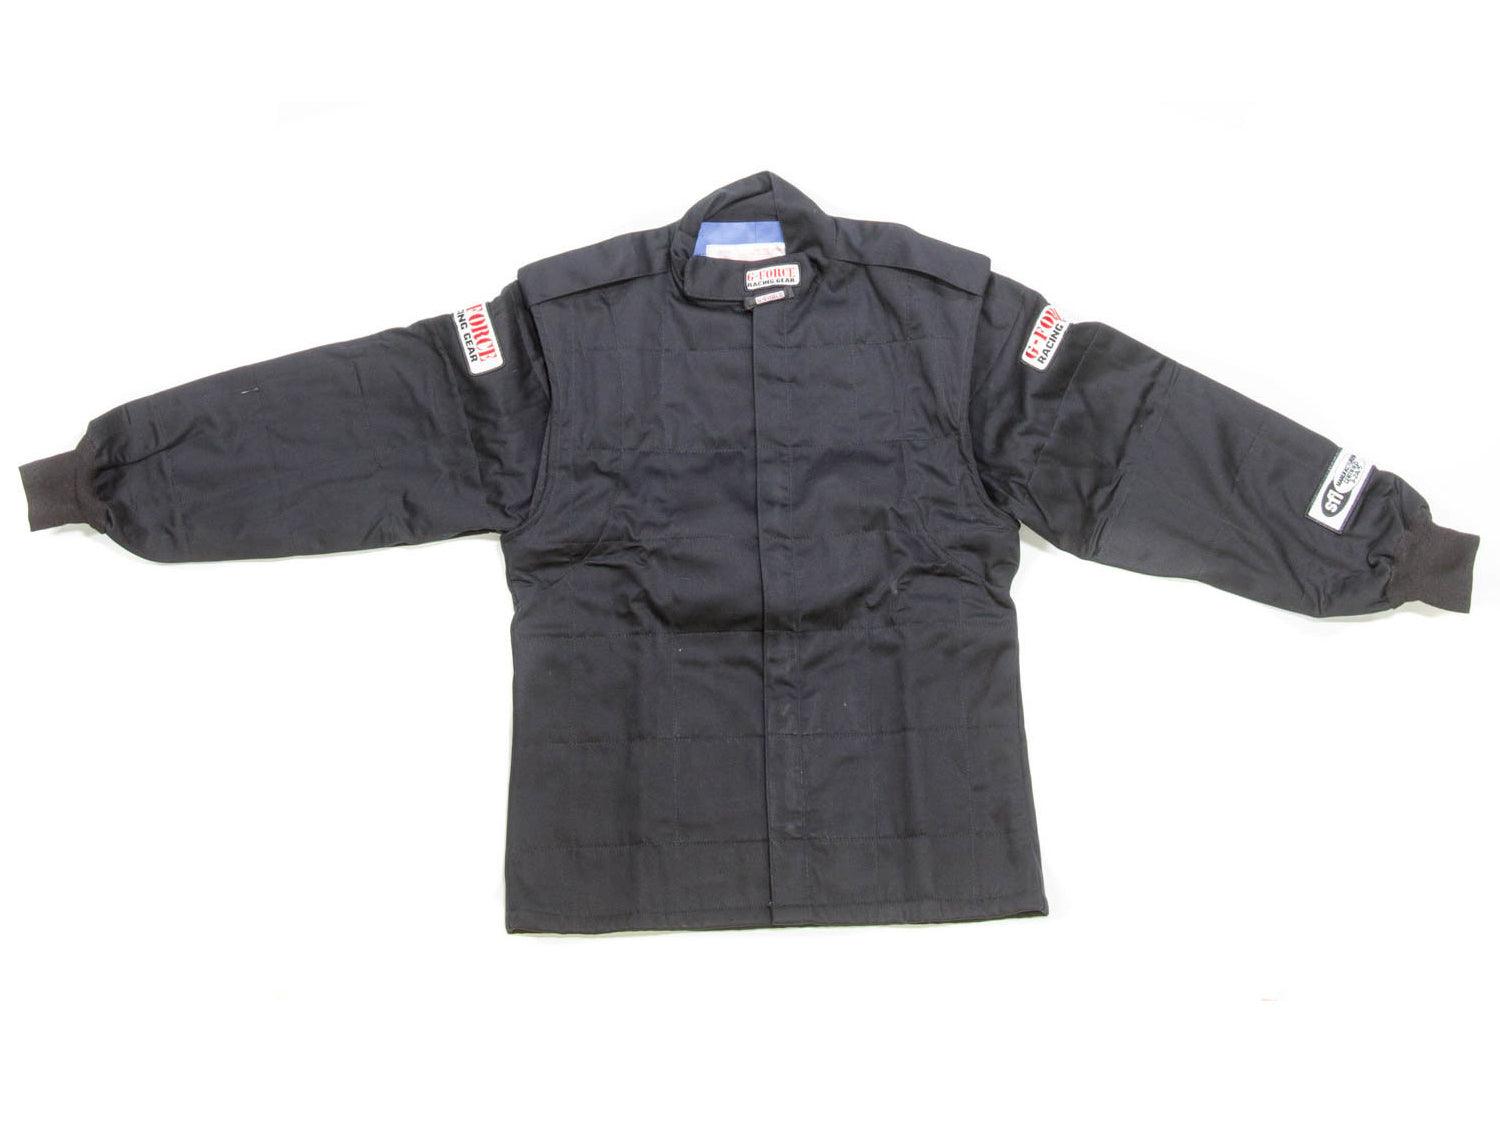 GF525 Jacket X-Large Black - Burlile Performance Products